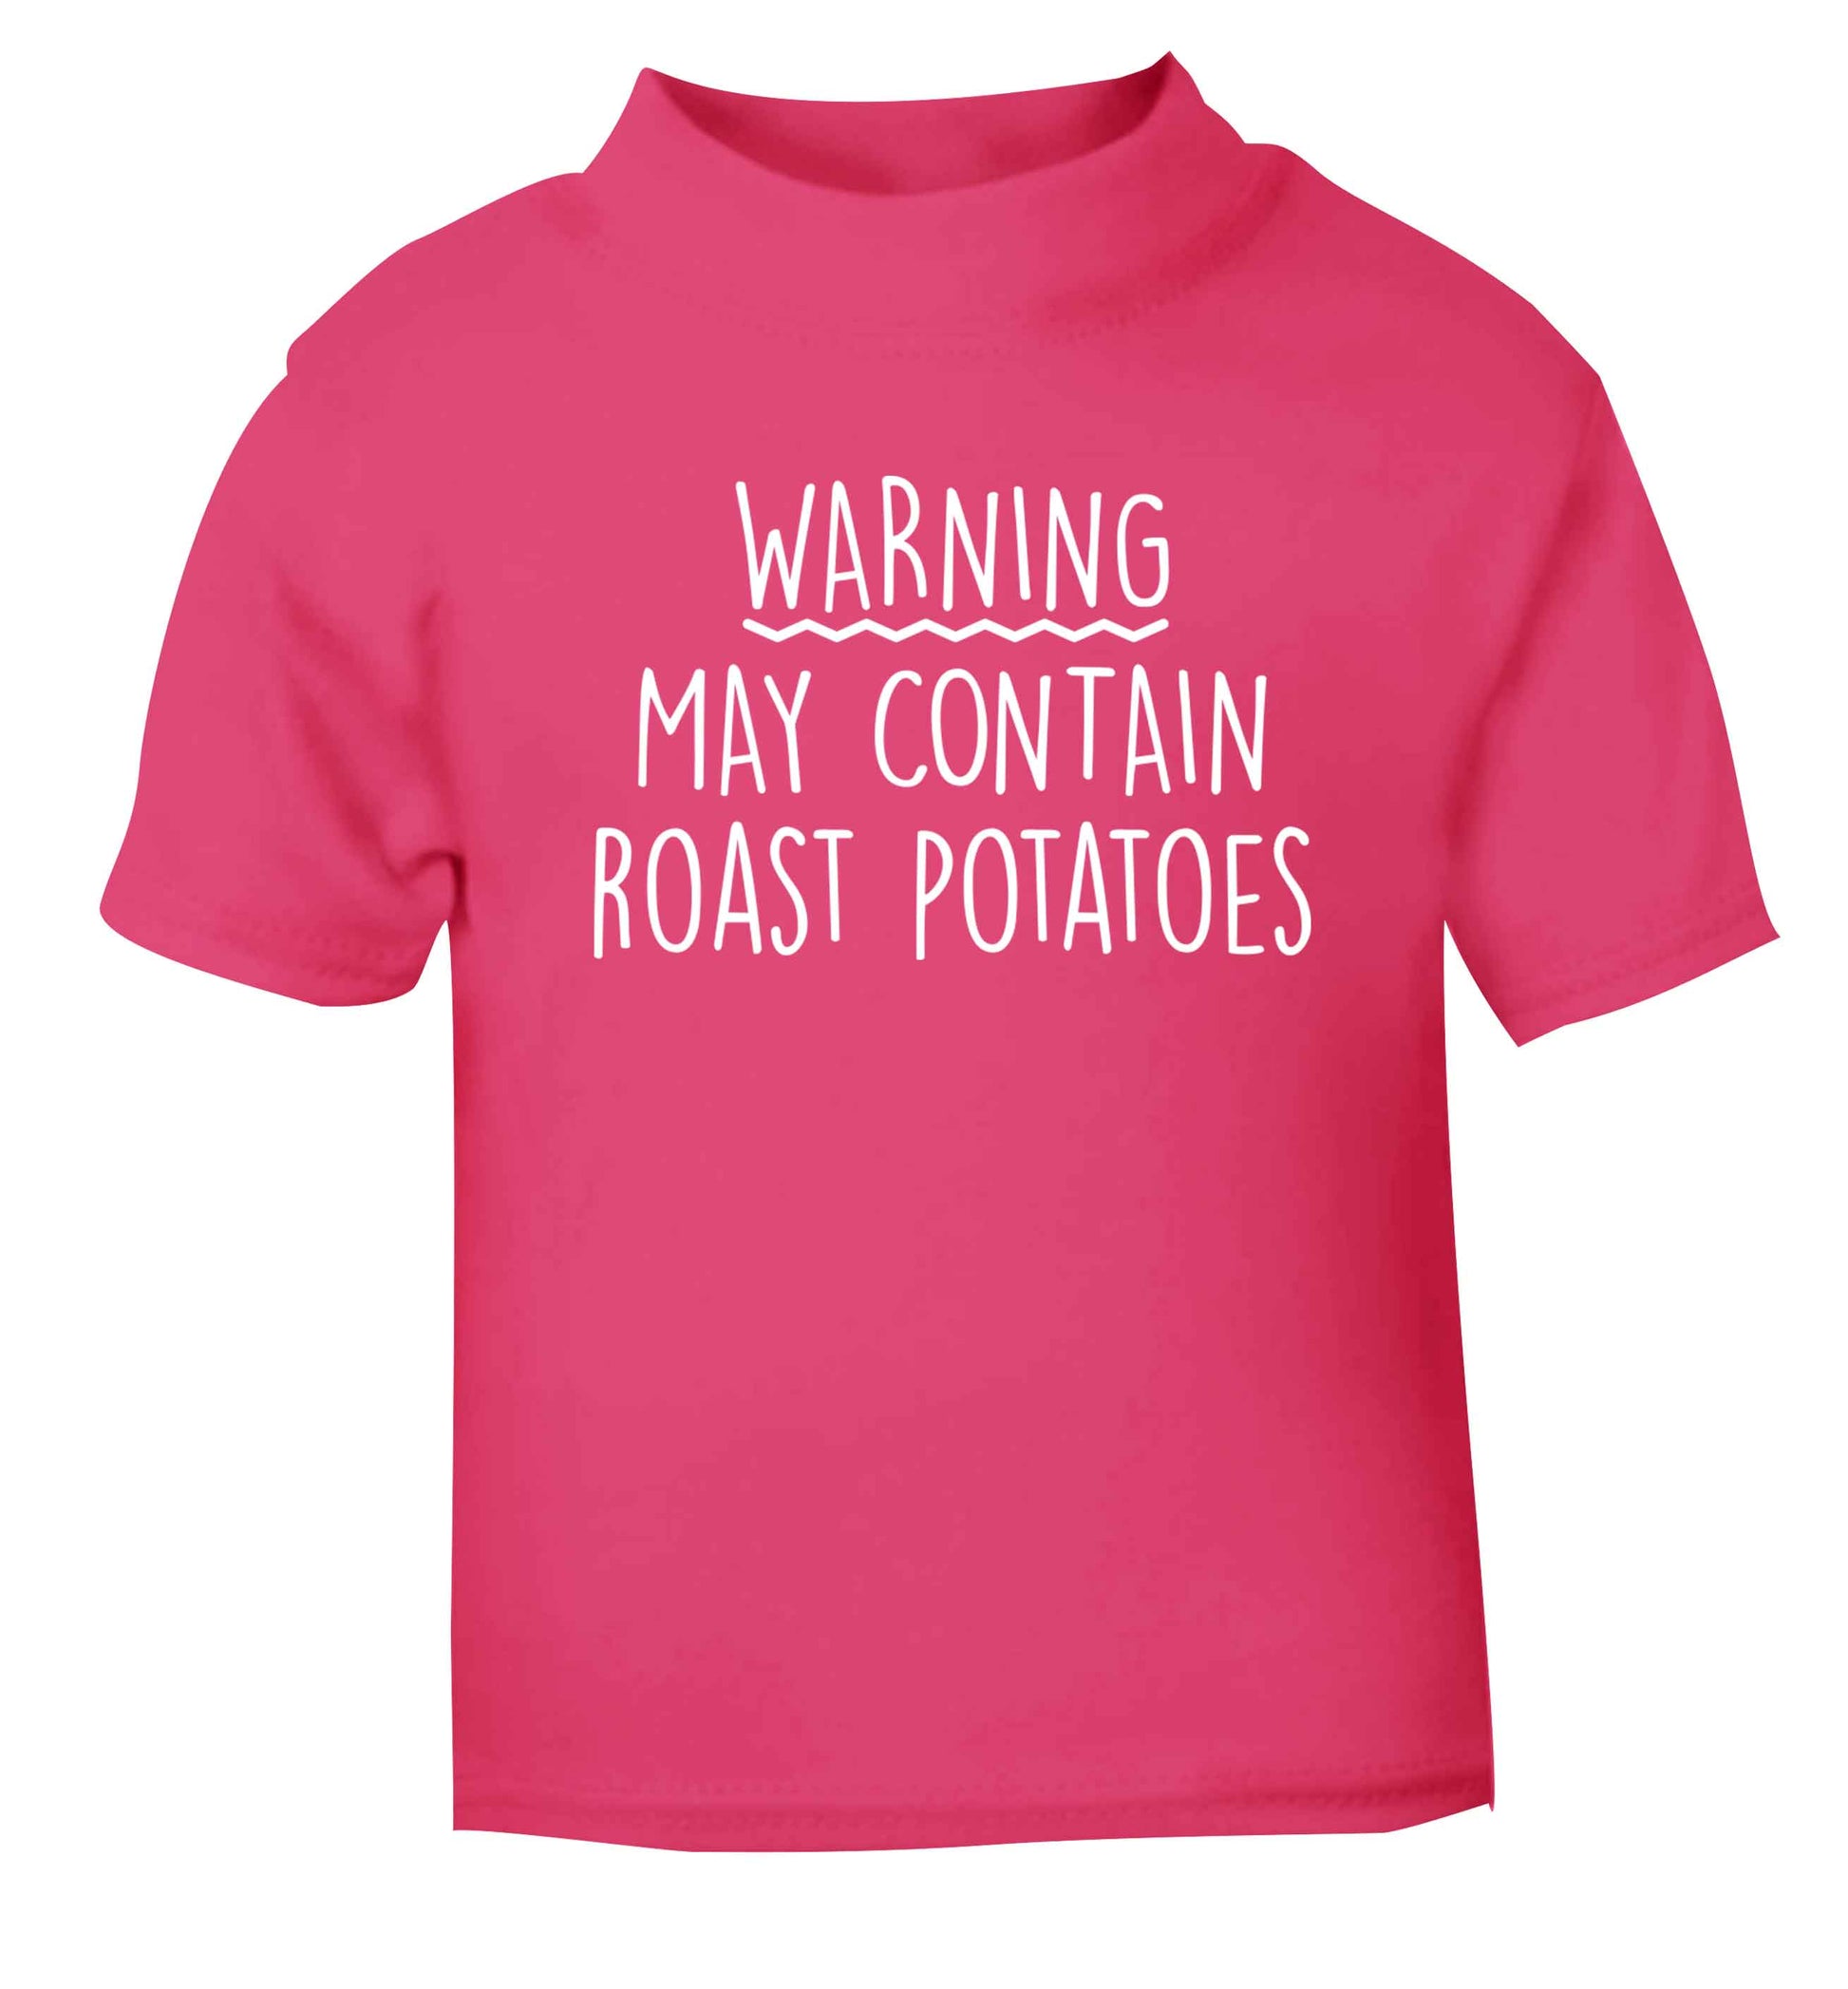 Warning may containg roast potatoes pink baby toddler Tshirt 2 Years